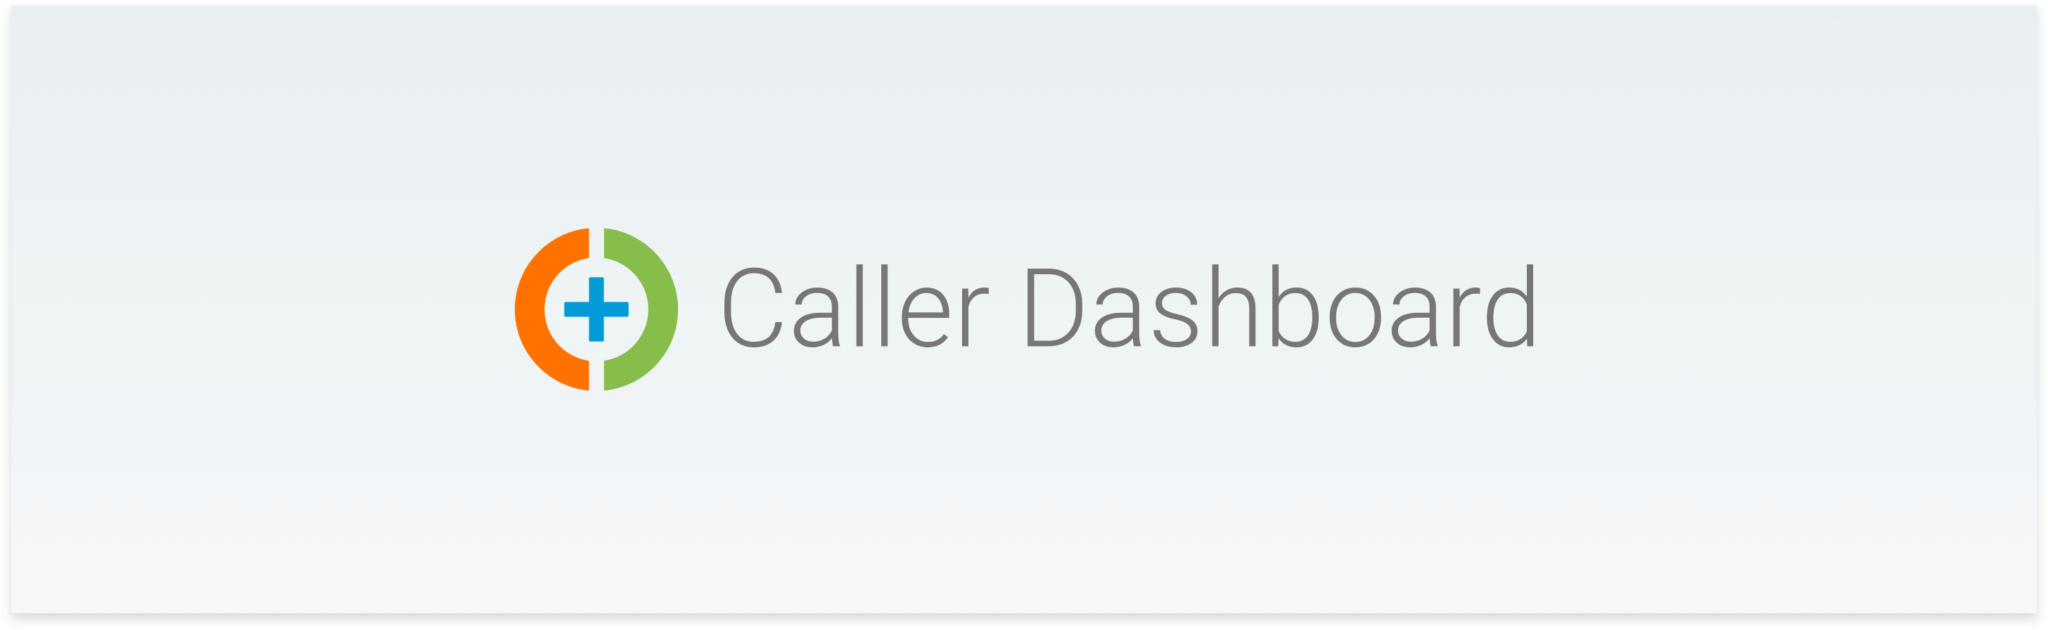 Caller Dashboard logo banner